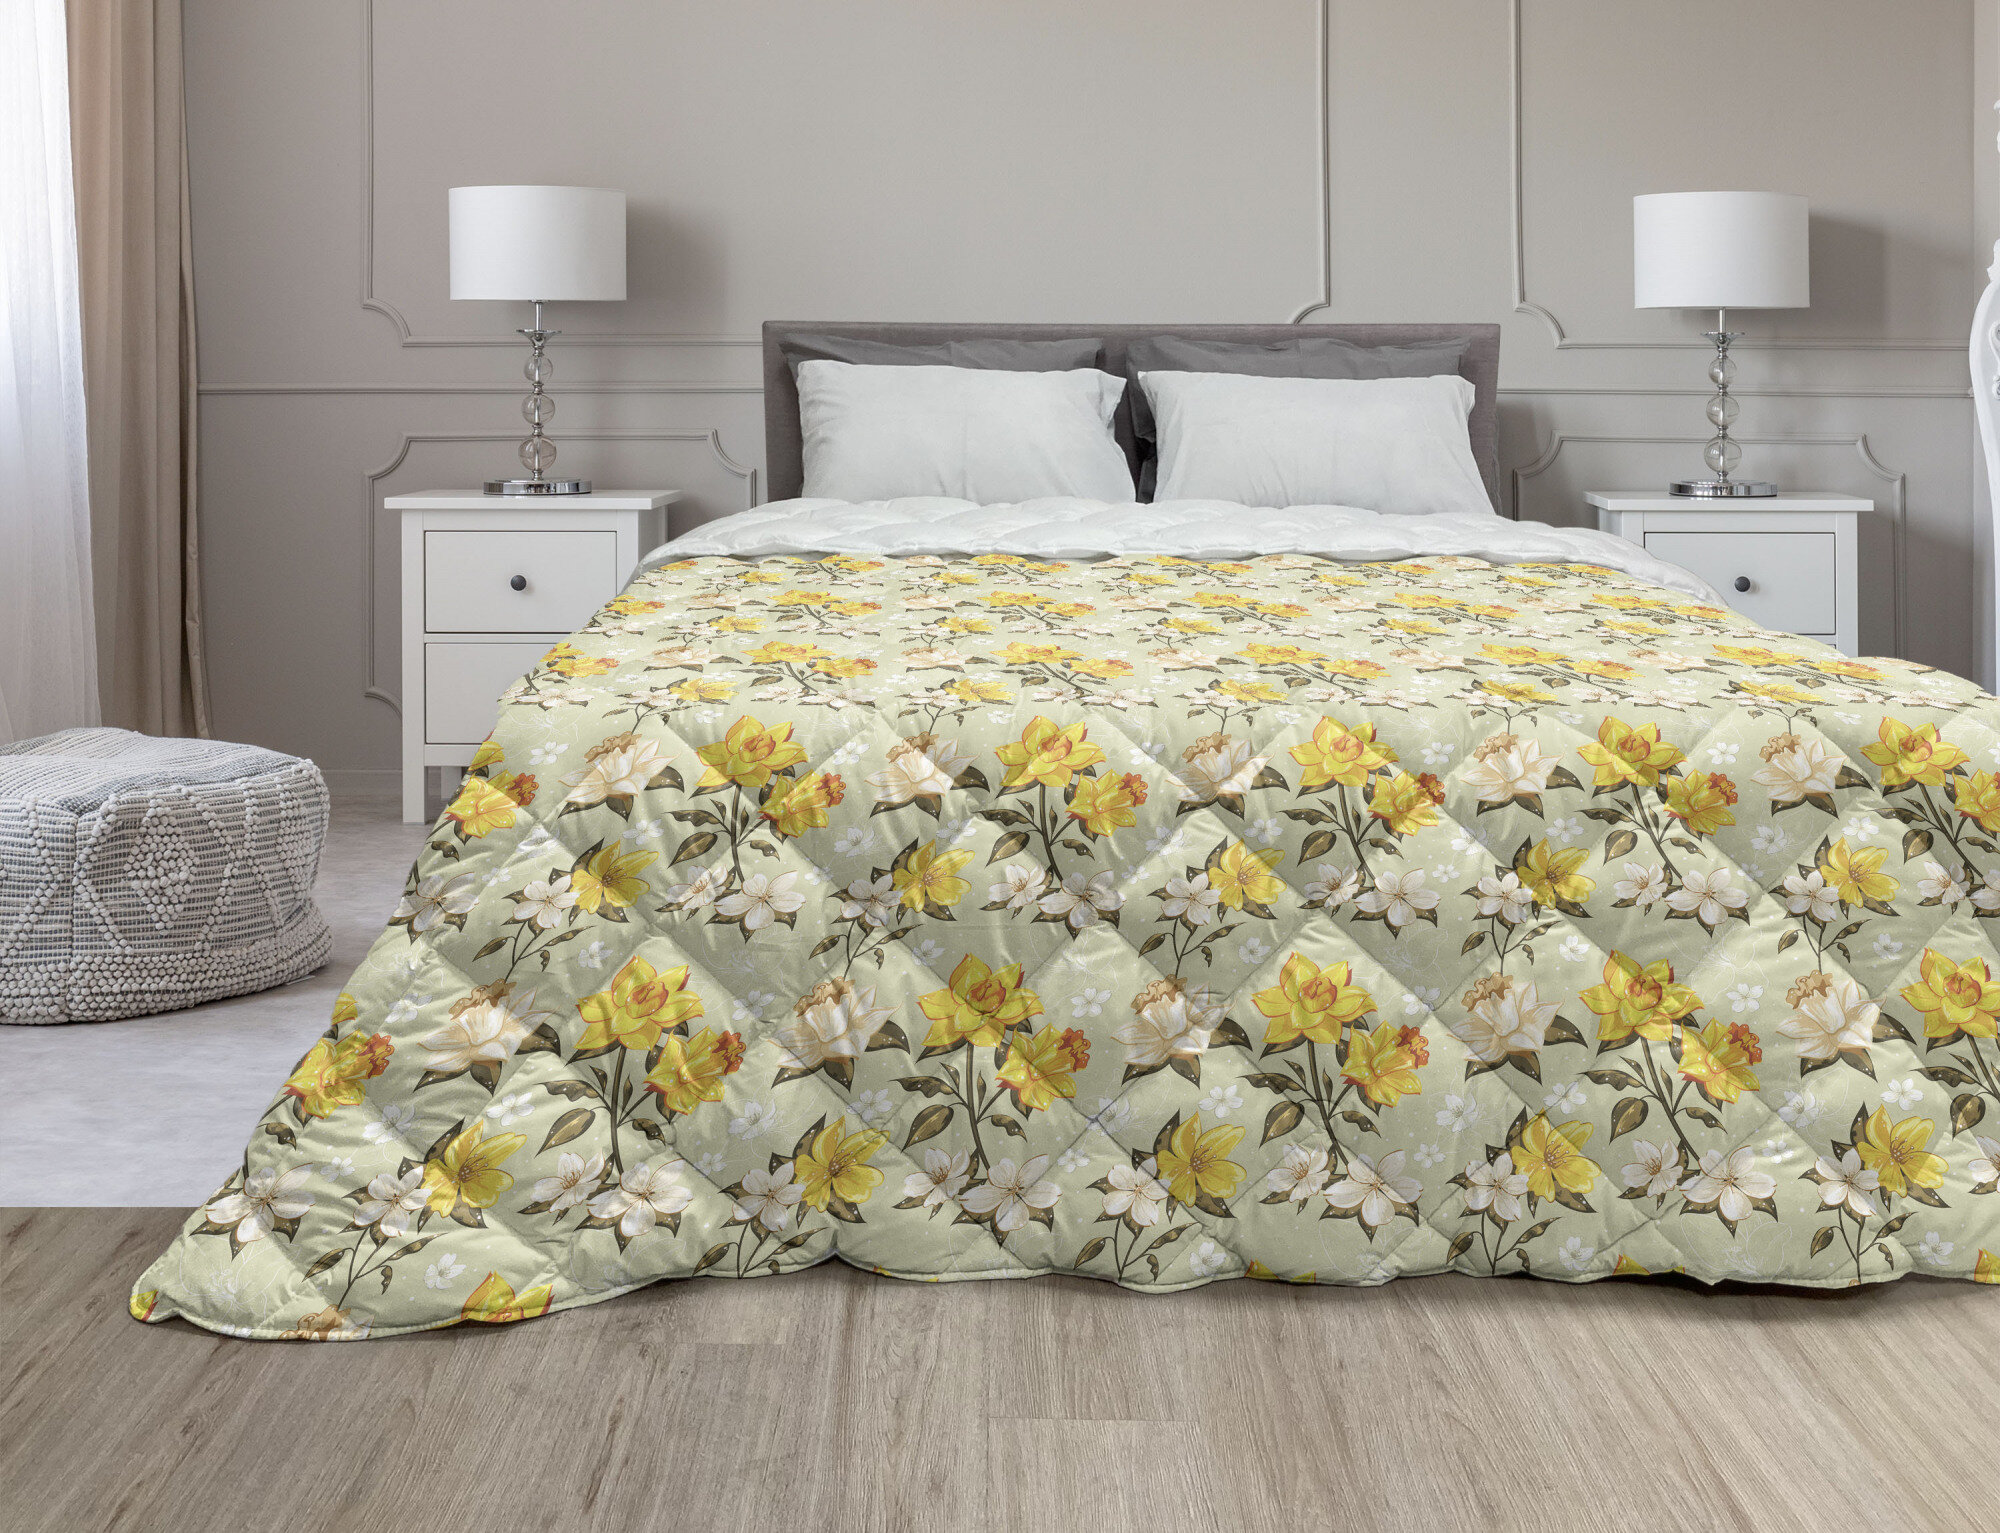 Comfort Classics 3M Thinsulate Down Alternative Comforter, Level 1 - Full/ Queen 